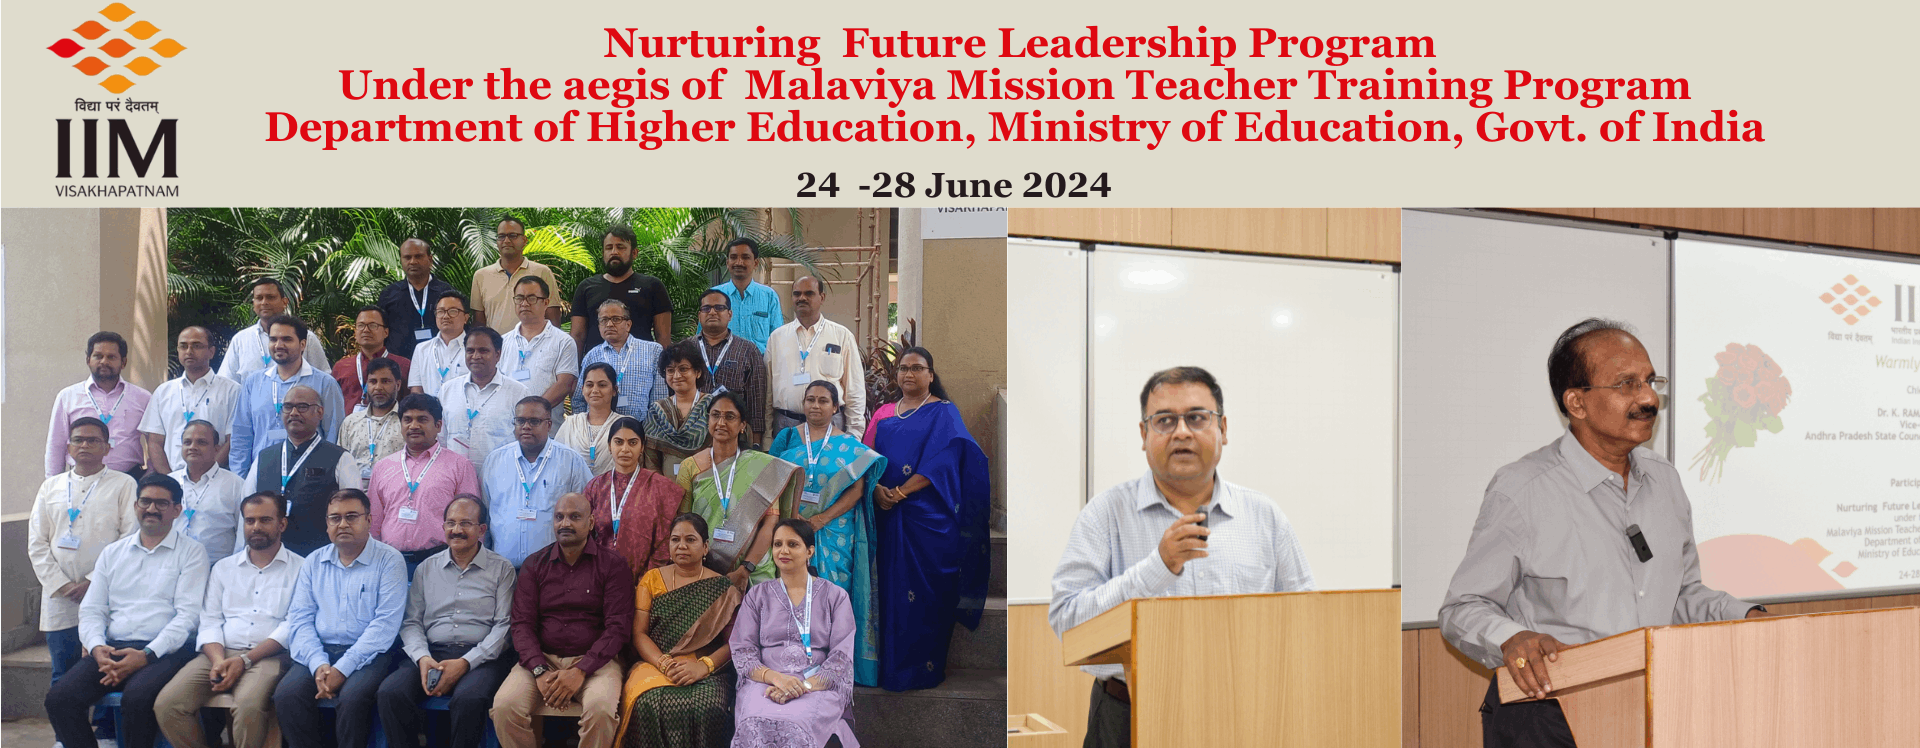 Nurturing Future Leadership Program